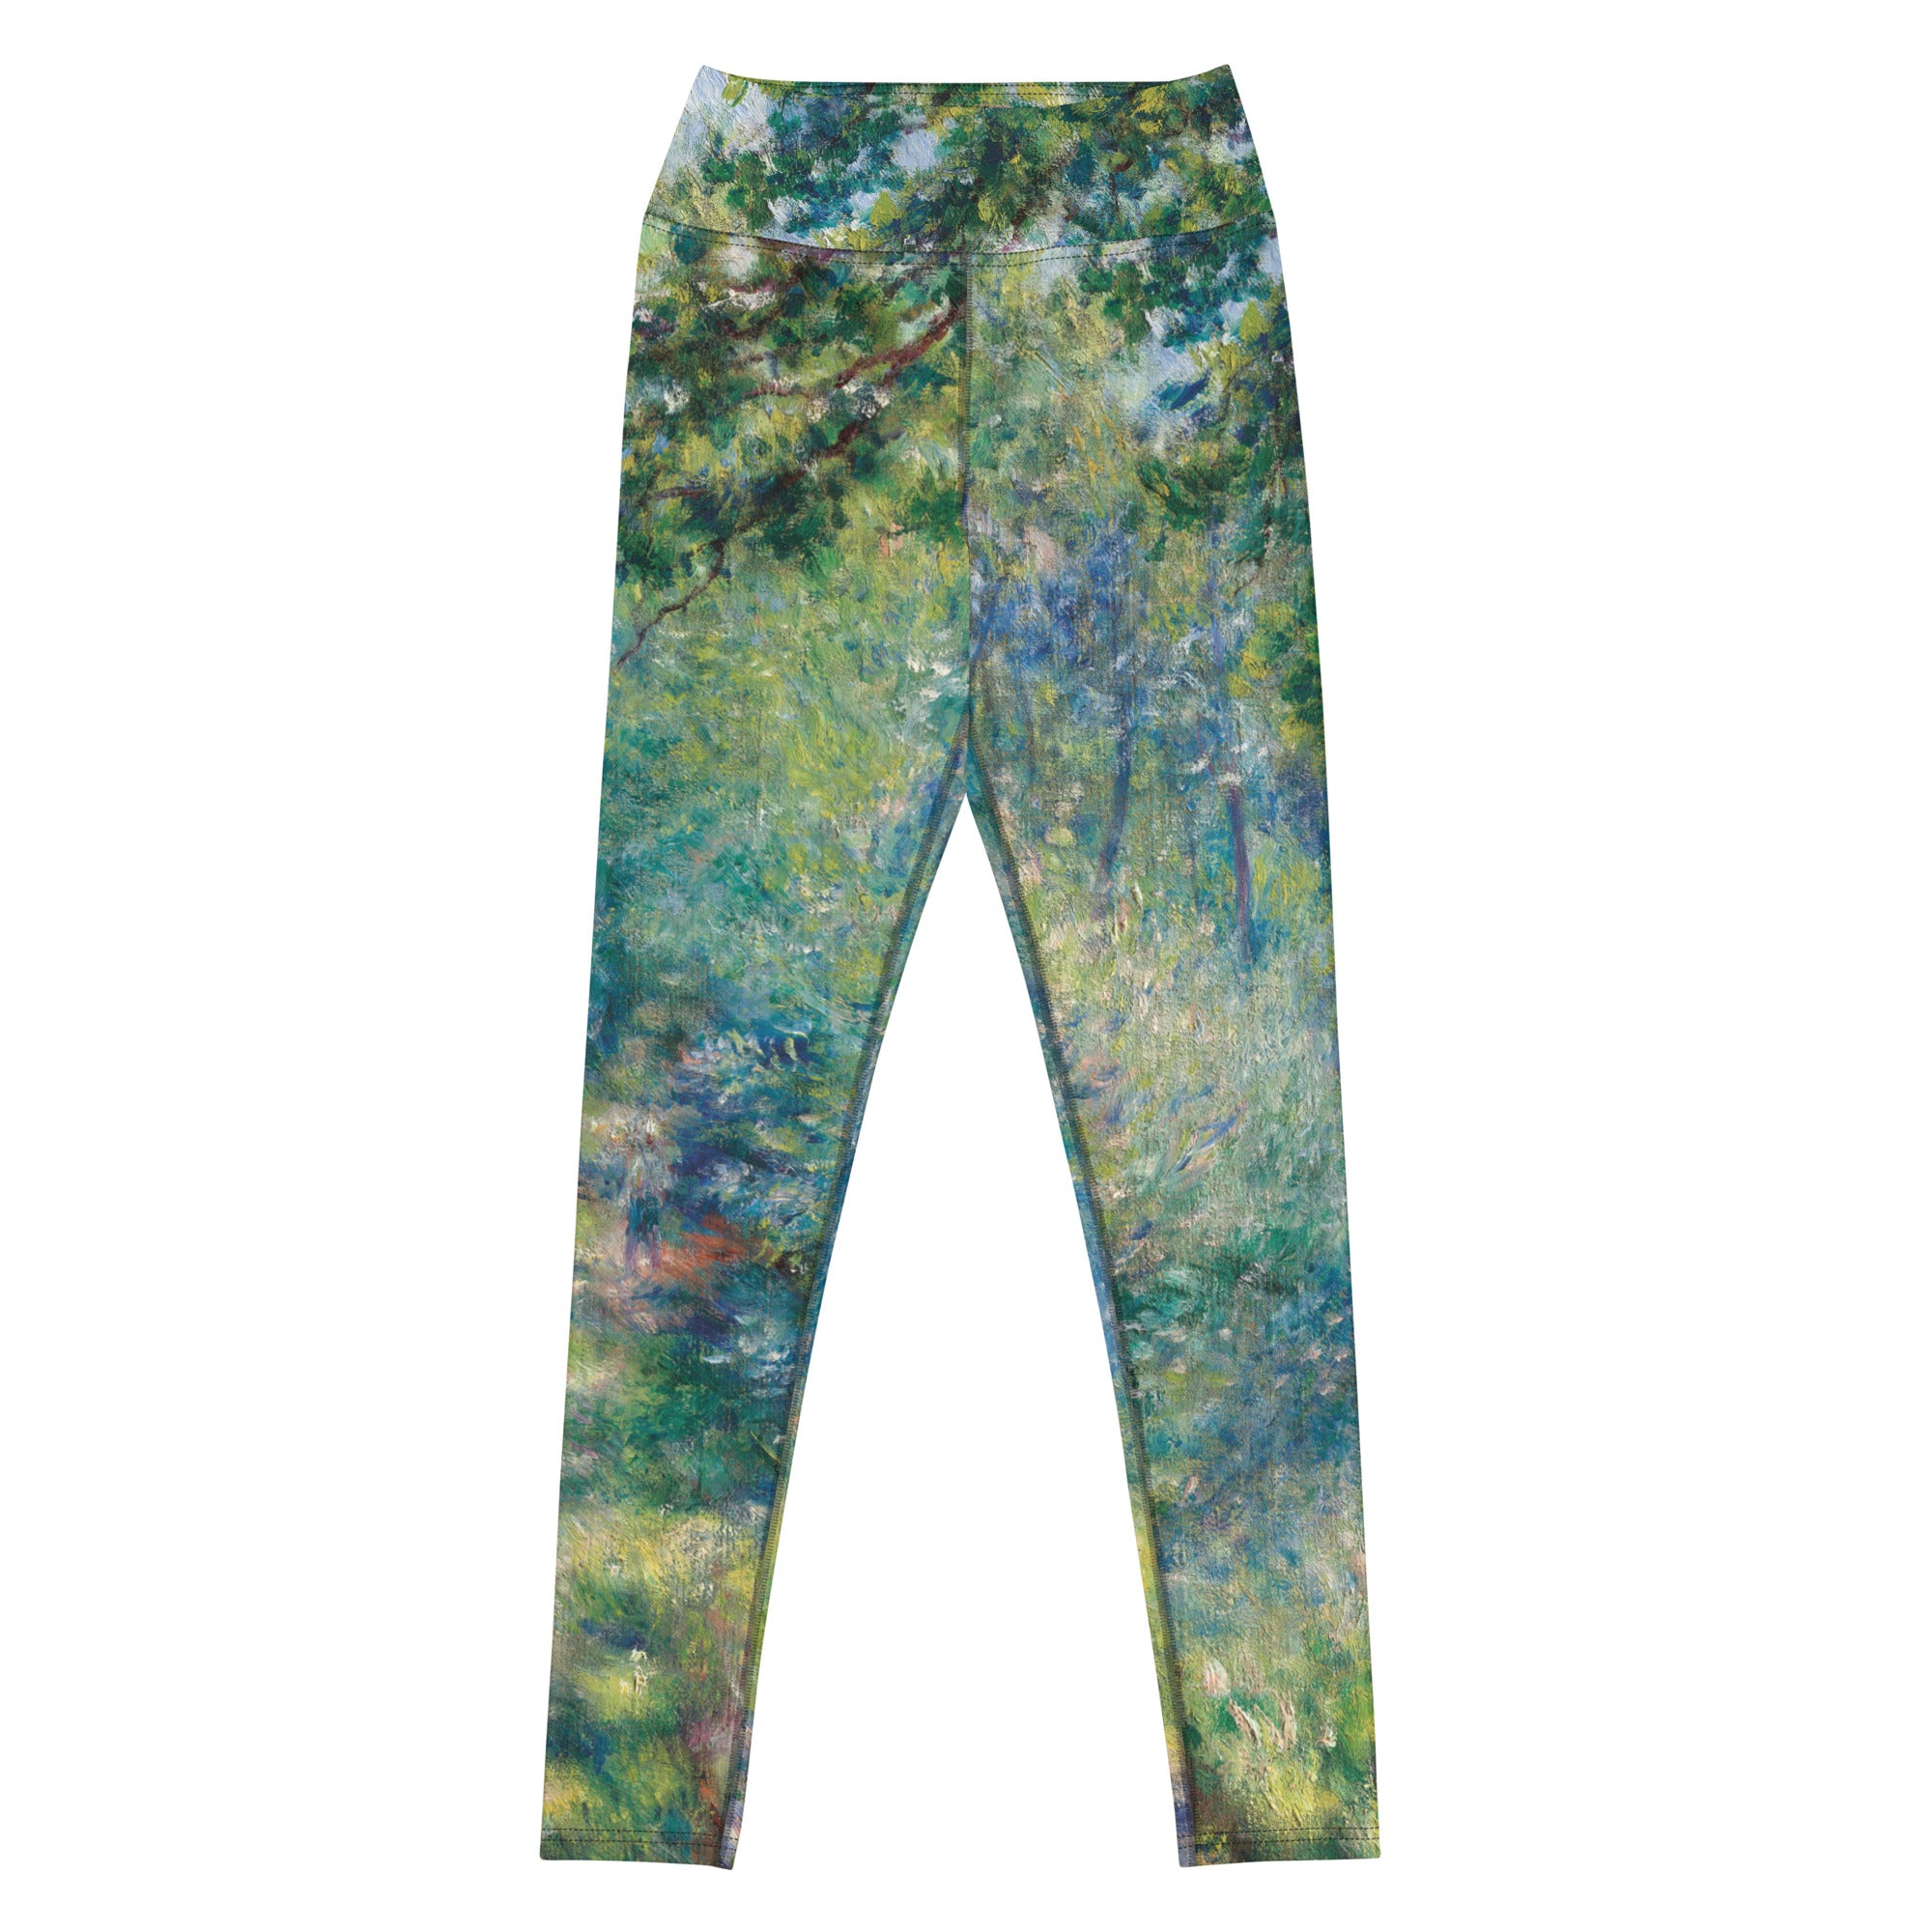 Pierre-Auguste Renoir 'Path in the Forest' Famous Painting Yoga Leggings | Premium Art Yoga Leggings